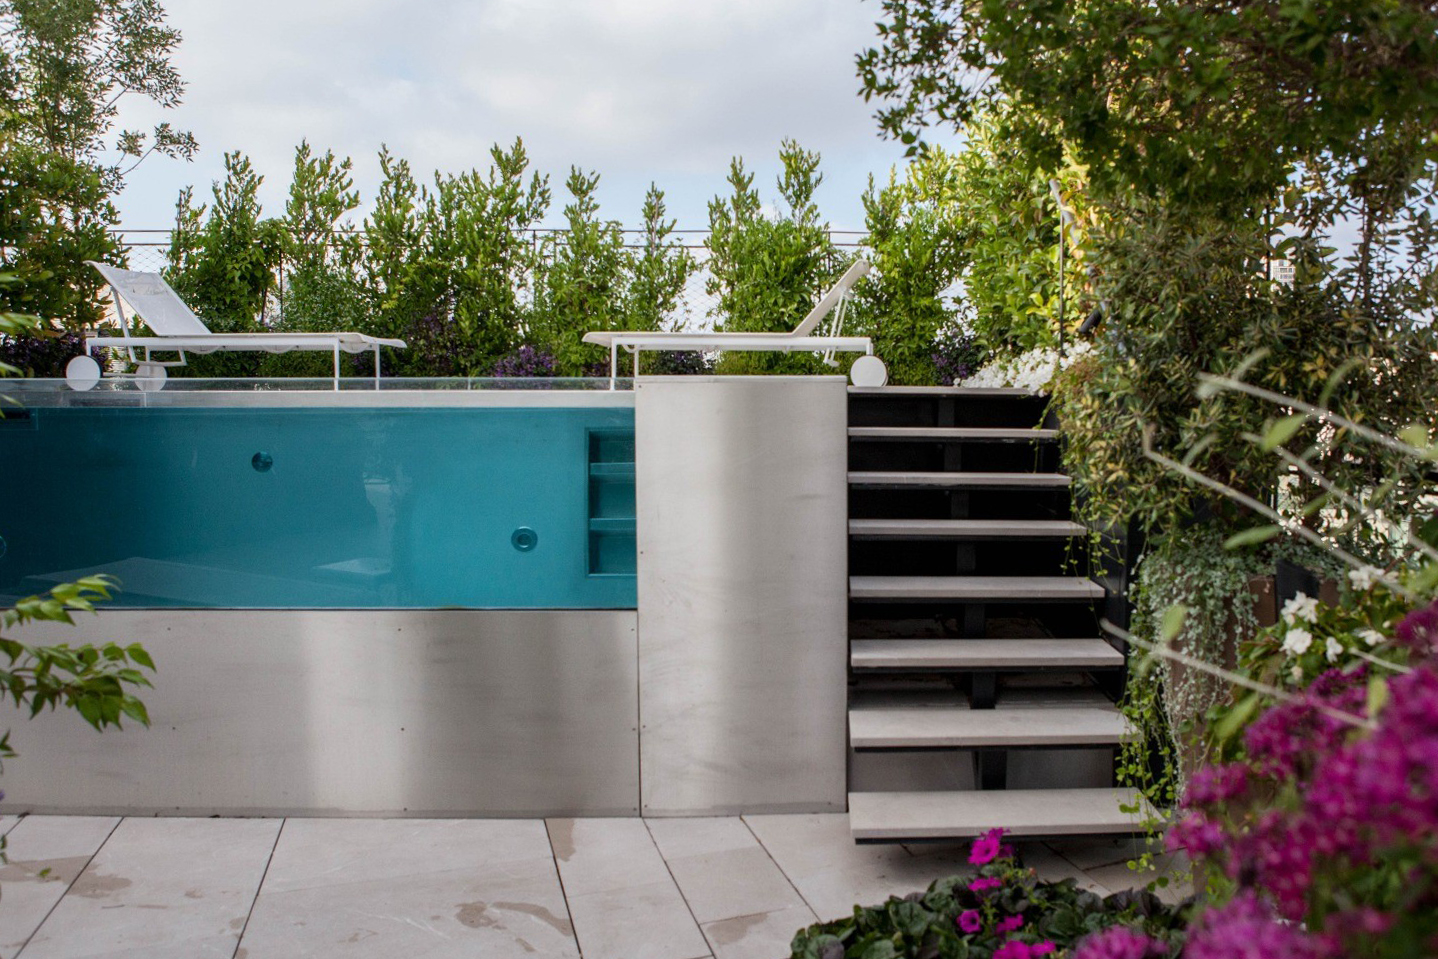 Prajete si skutočne luxusný bazén? Zvoľte infinity pool s presklenou stenou | IMAGINOX